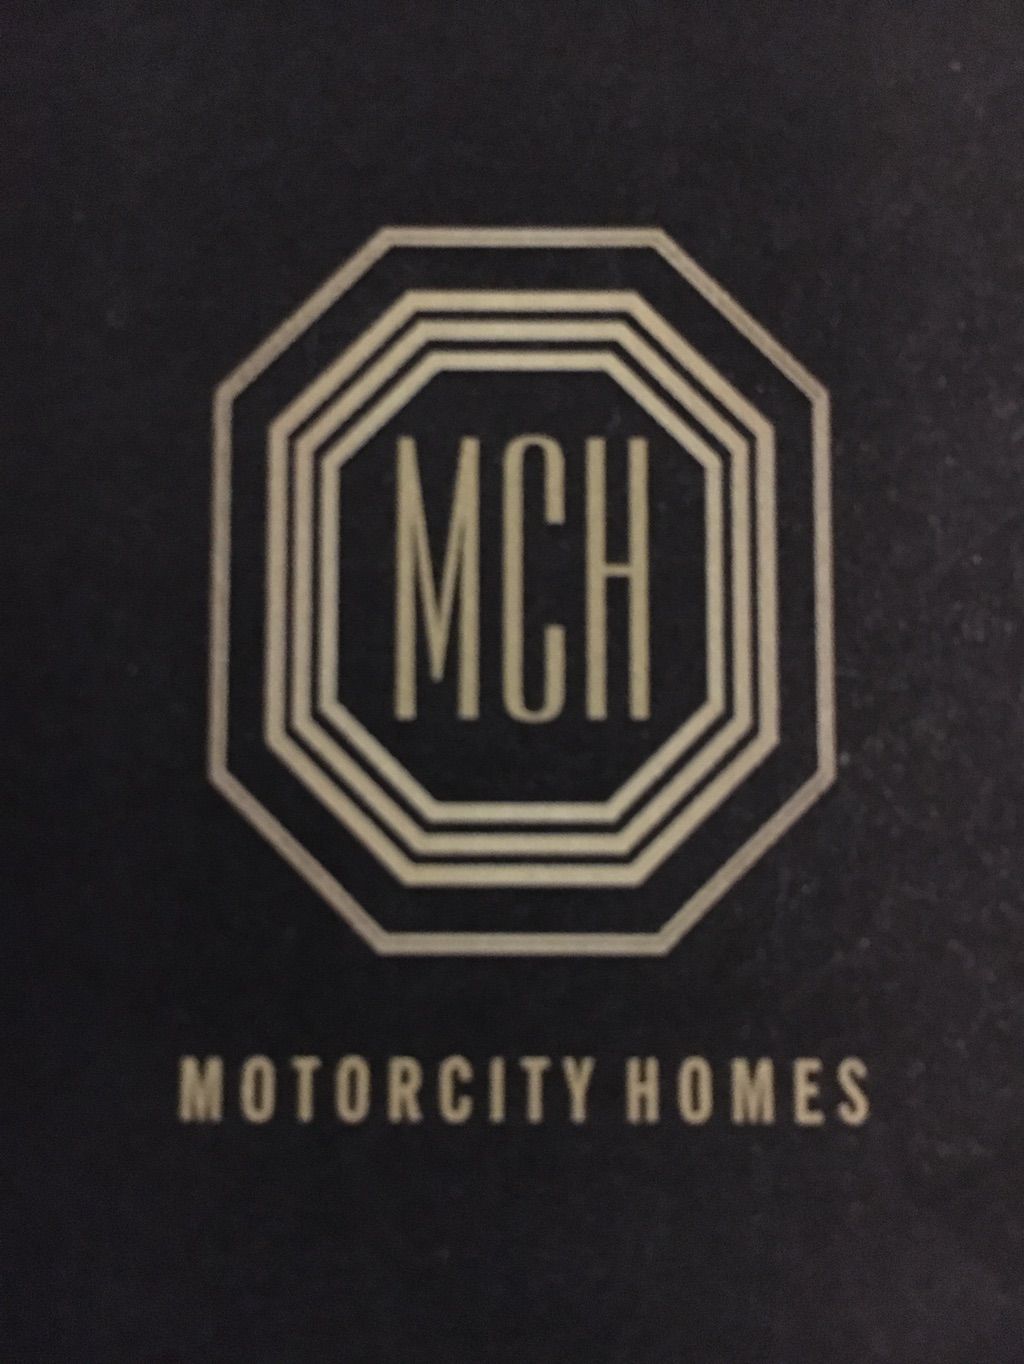 Motorcity homes